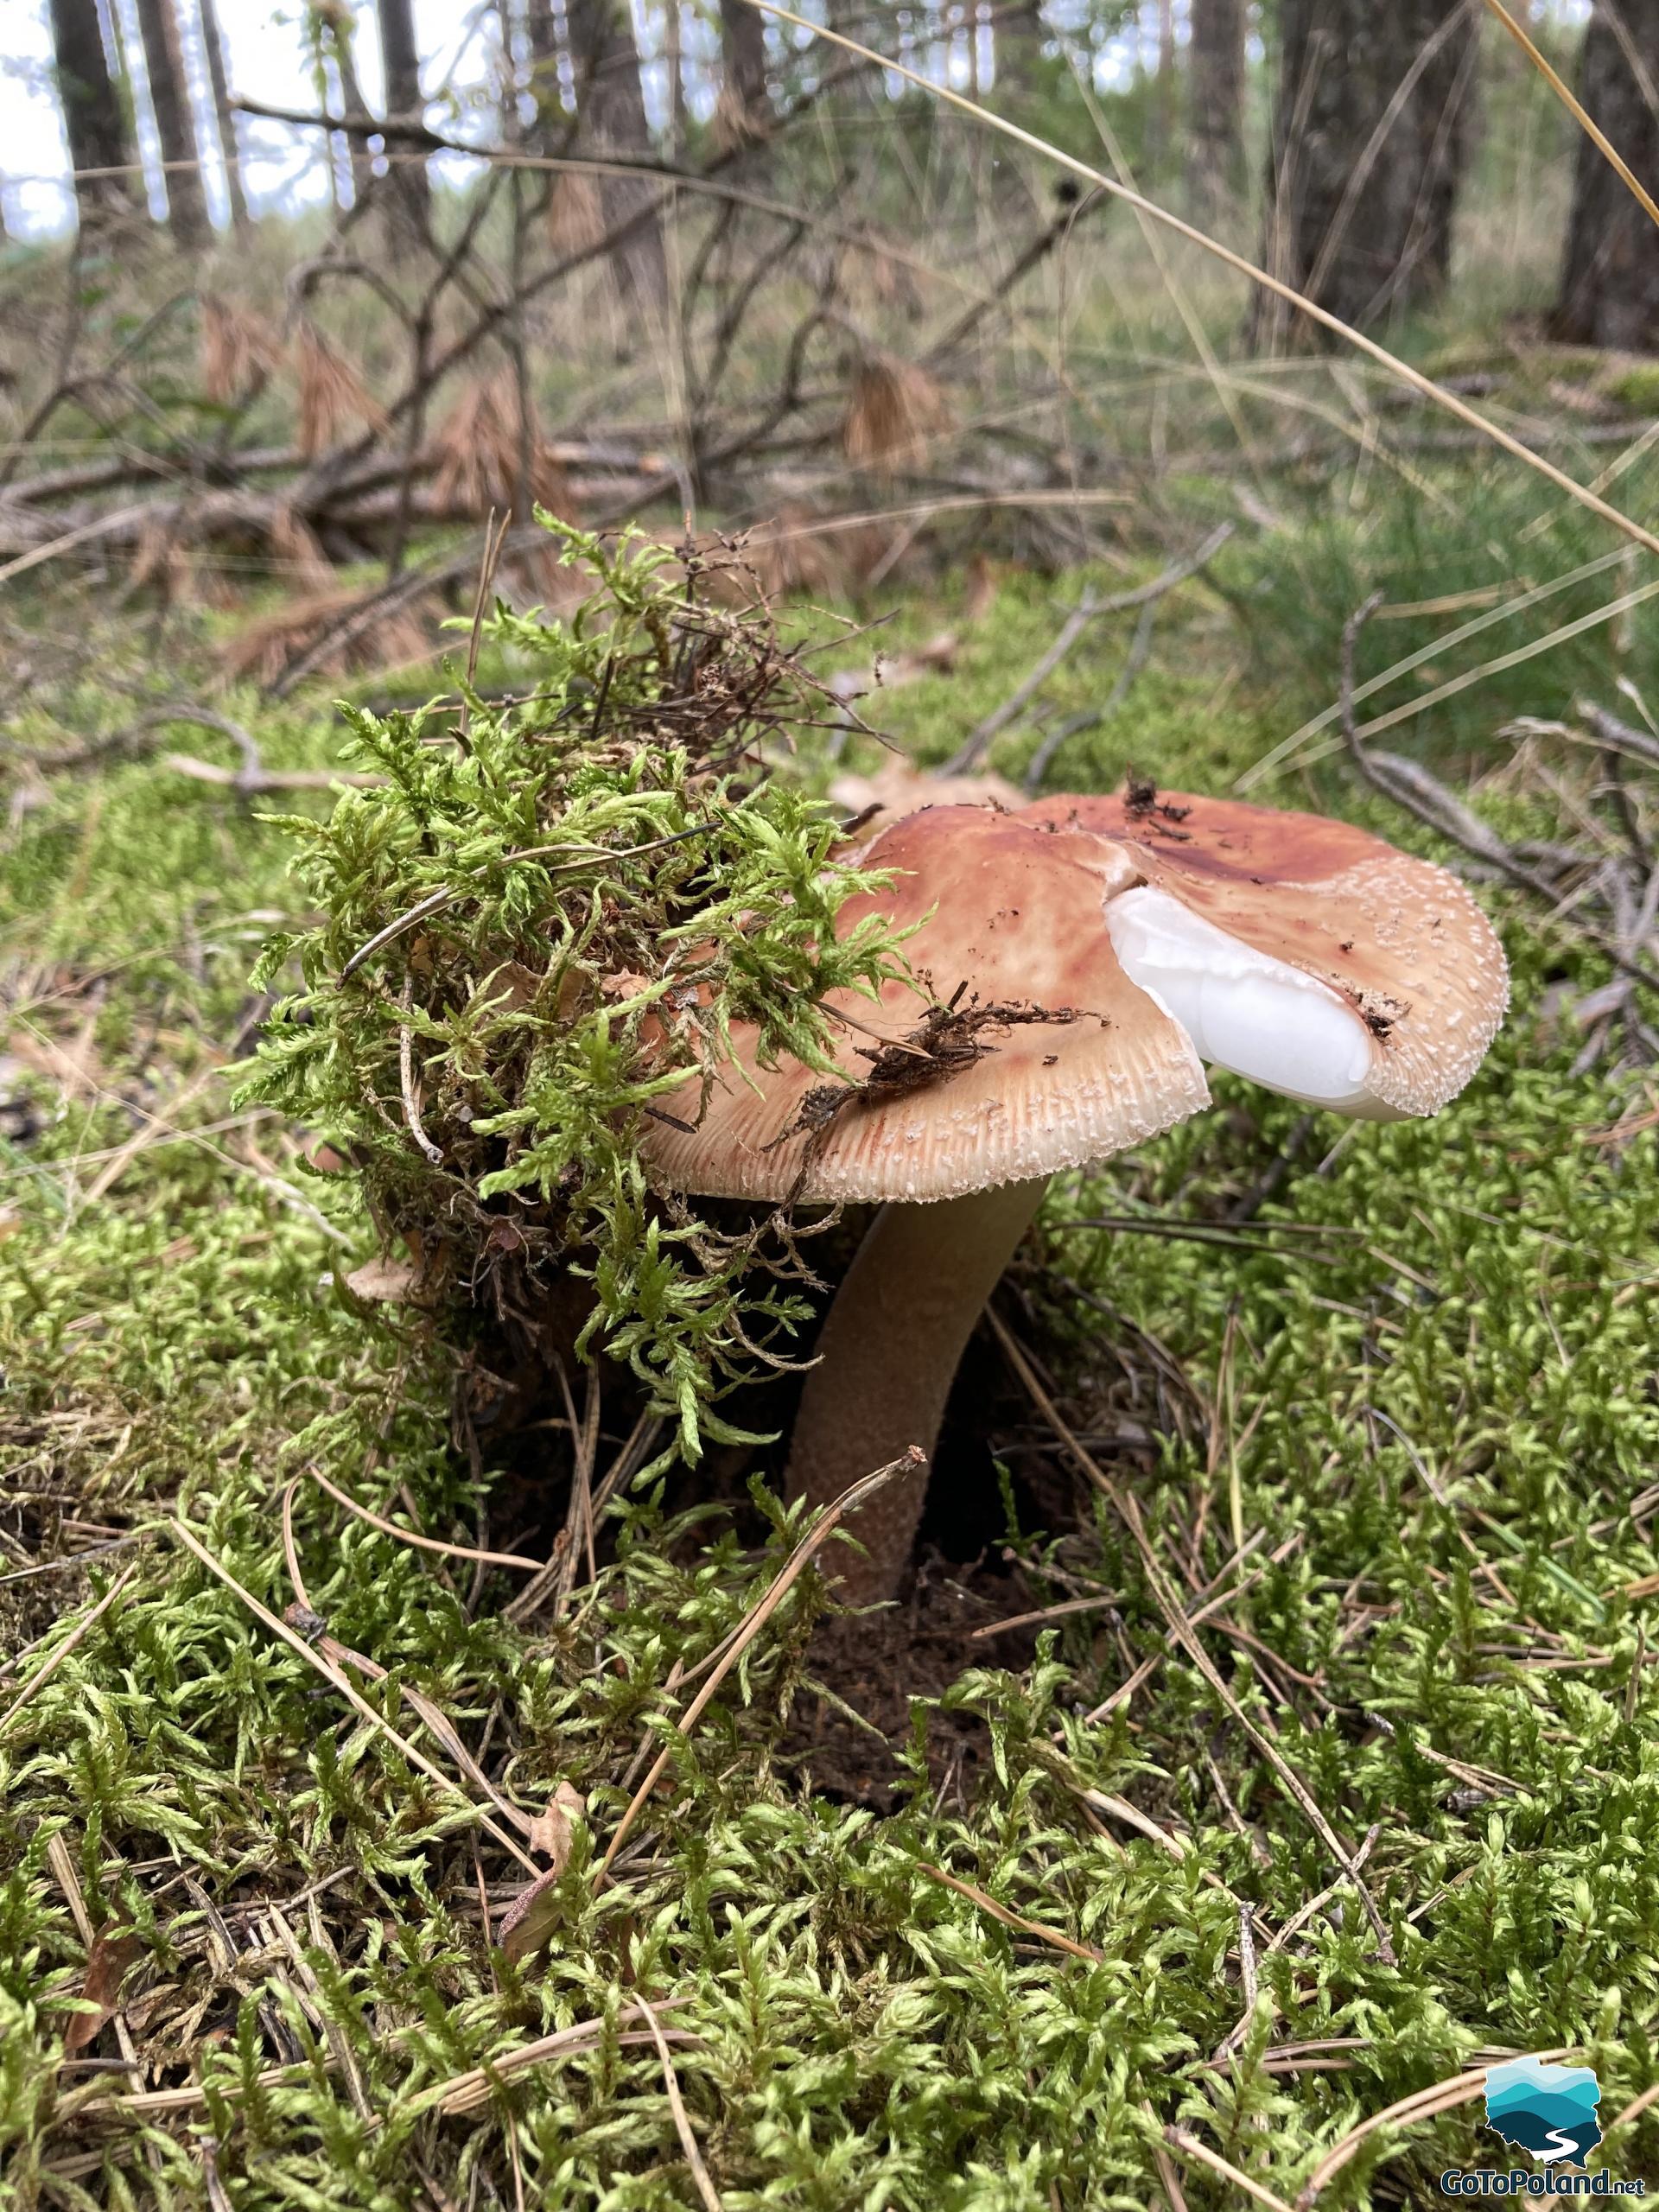 One, orange, inedible mushroom, maybe toadstool, growing in moss in a forest